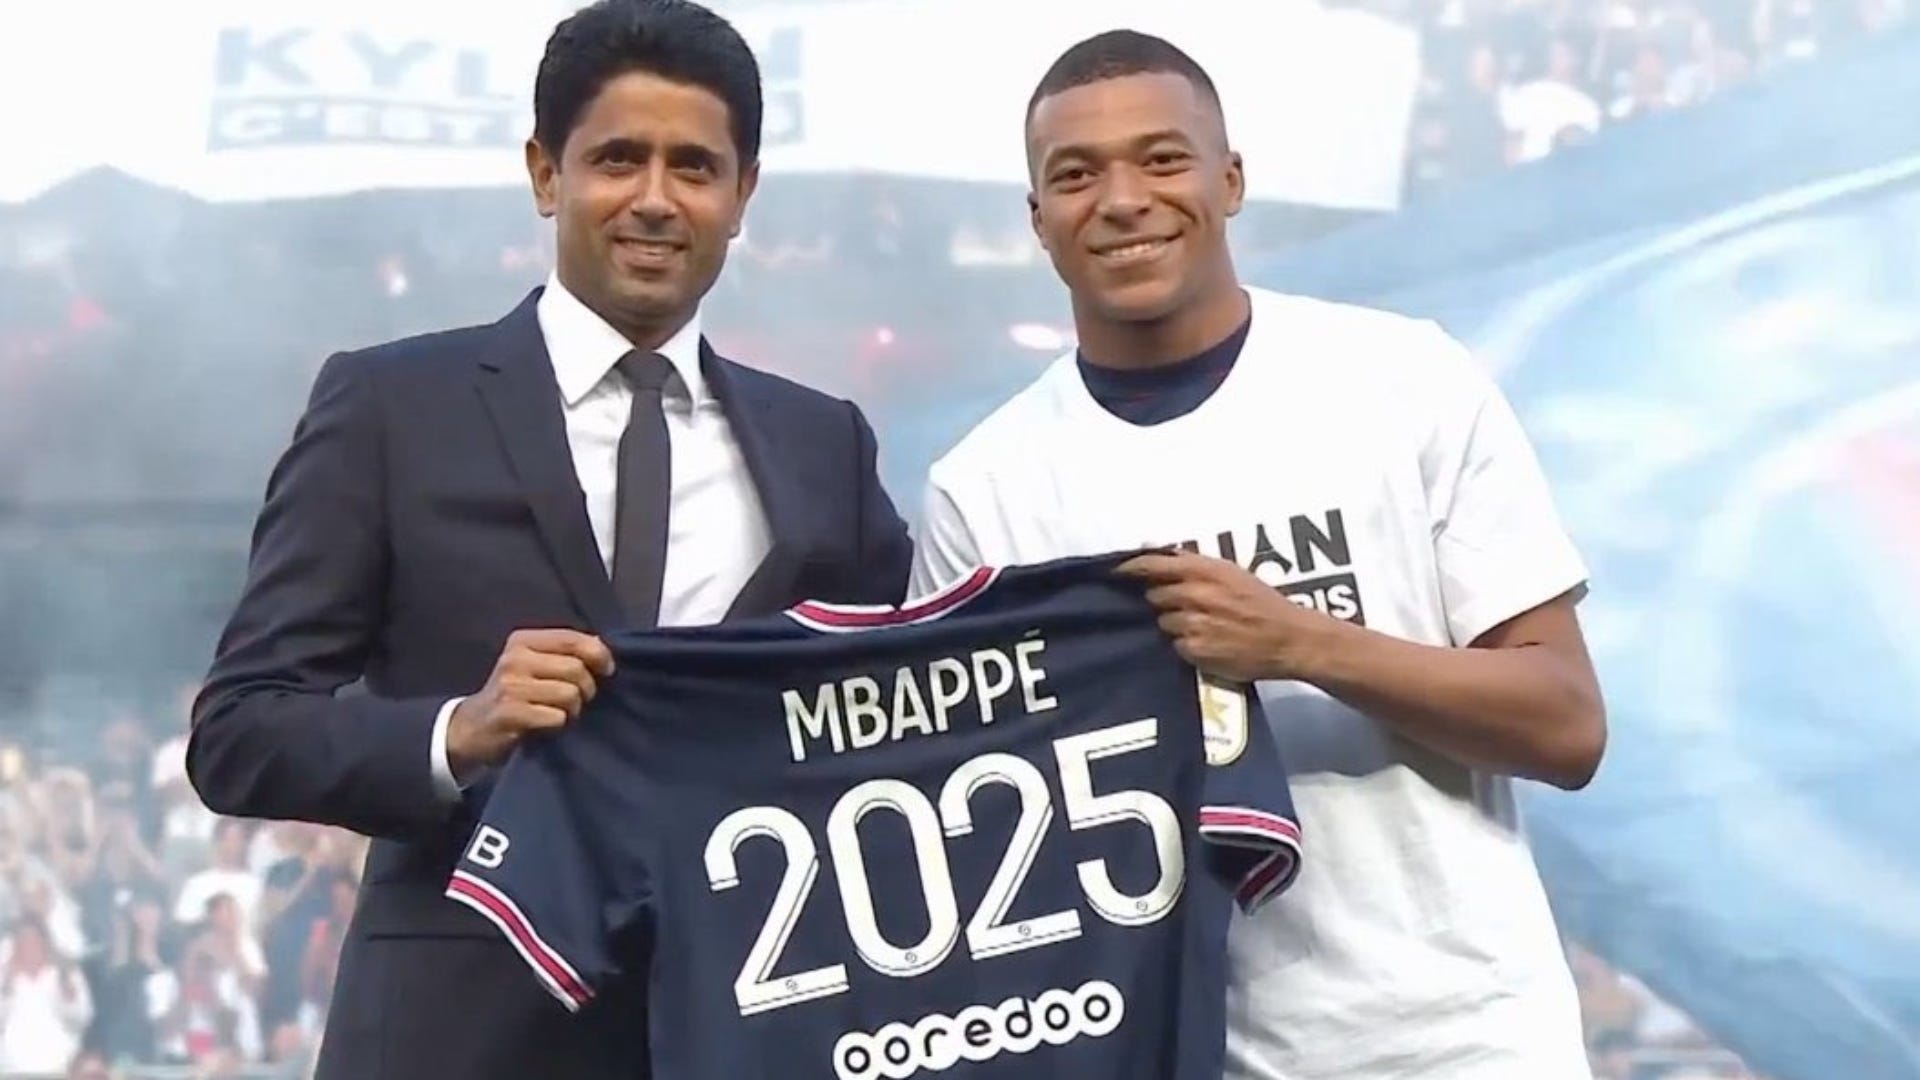 Mbappé 2025